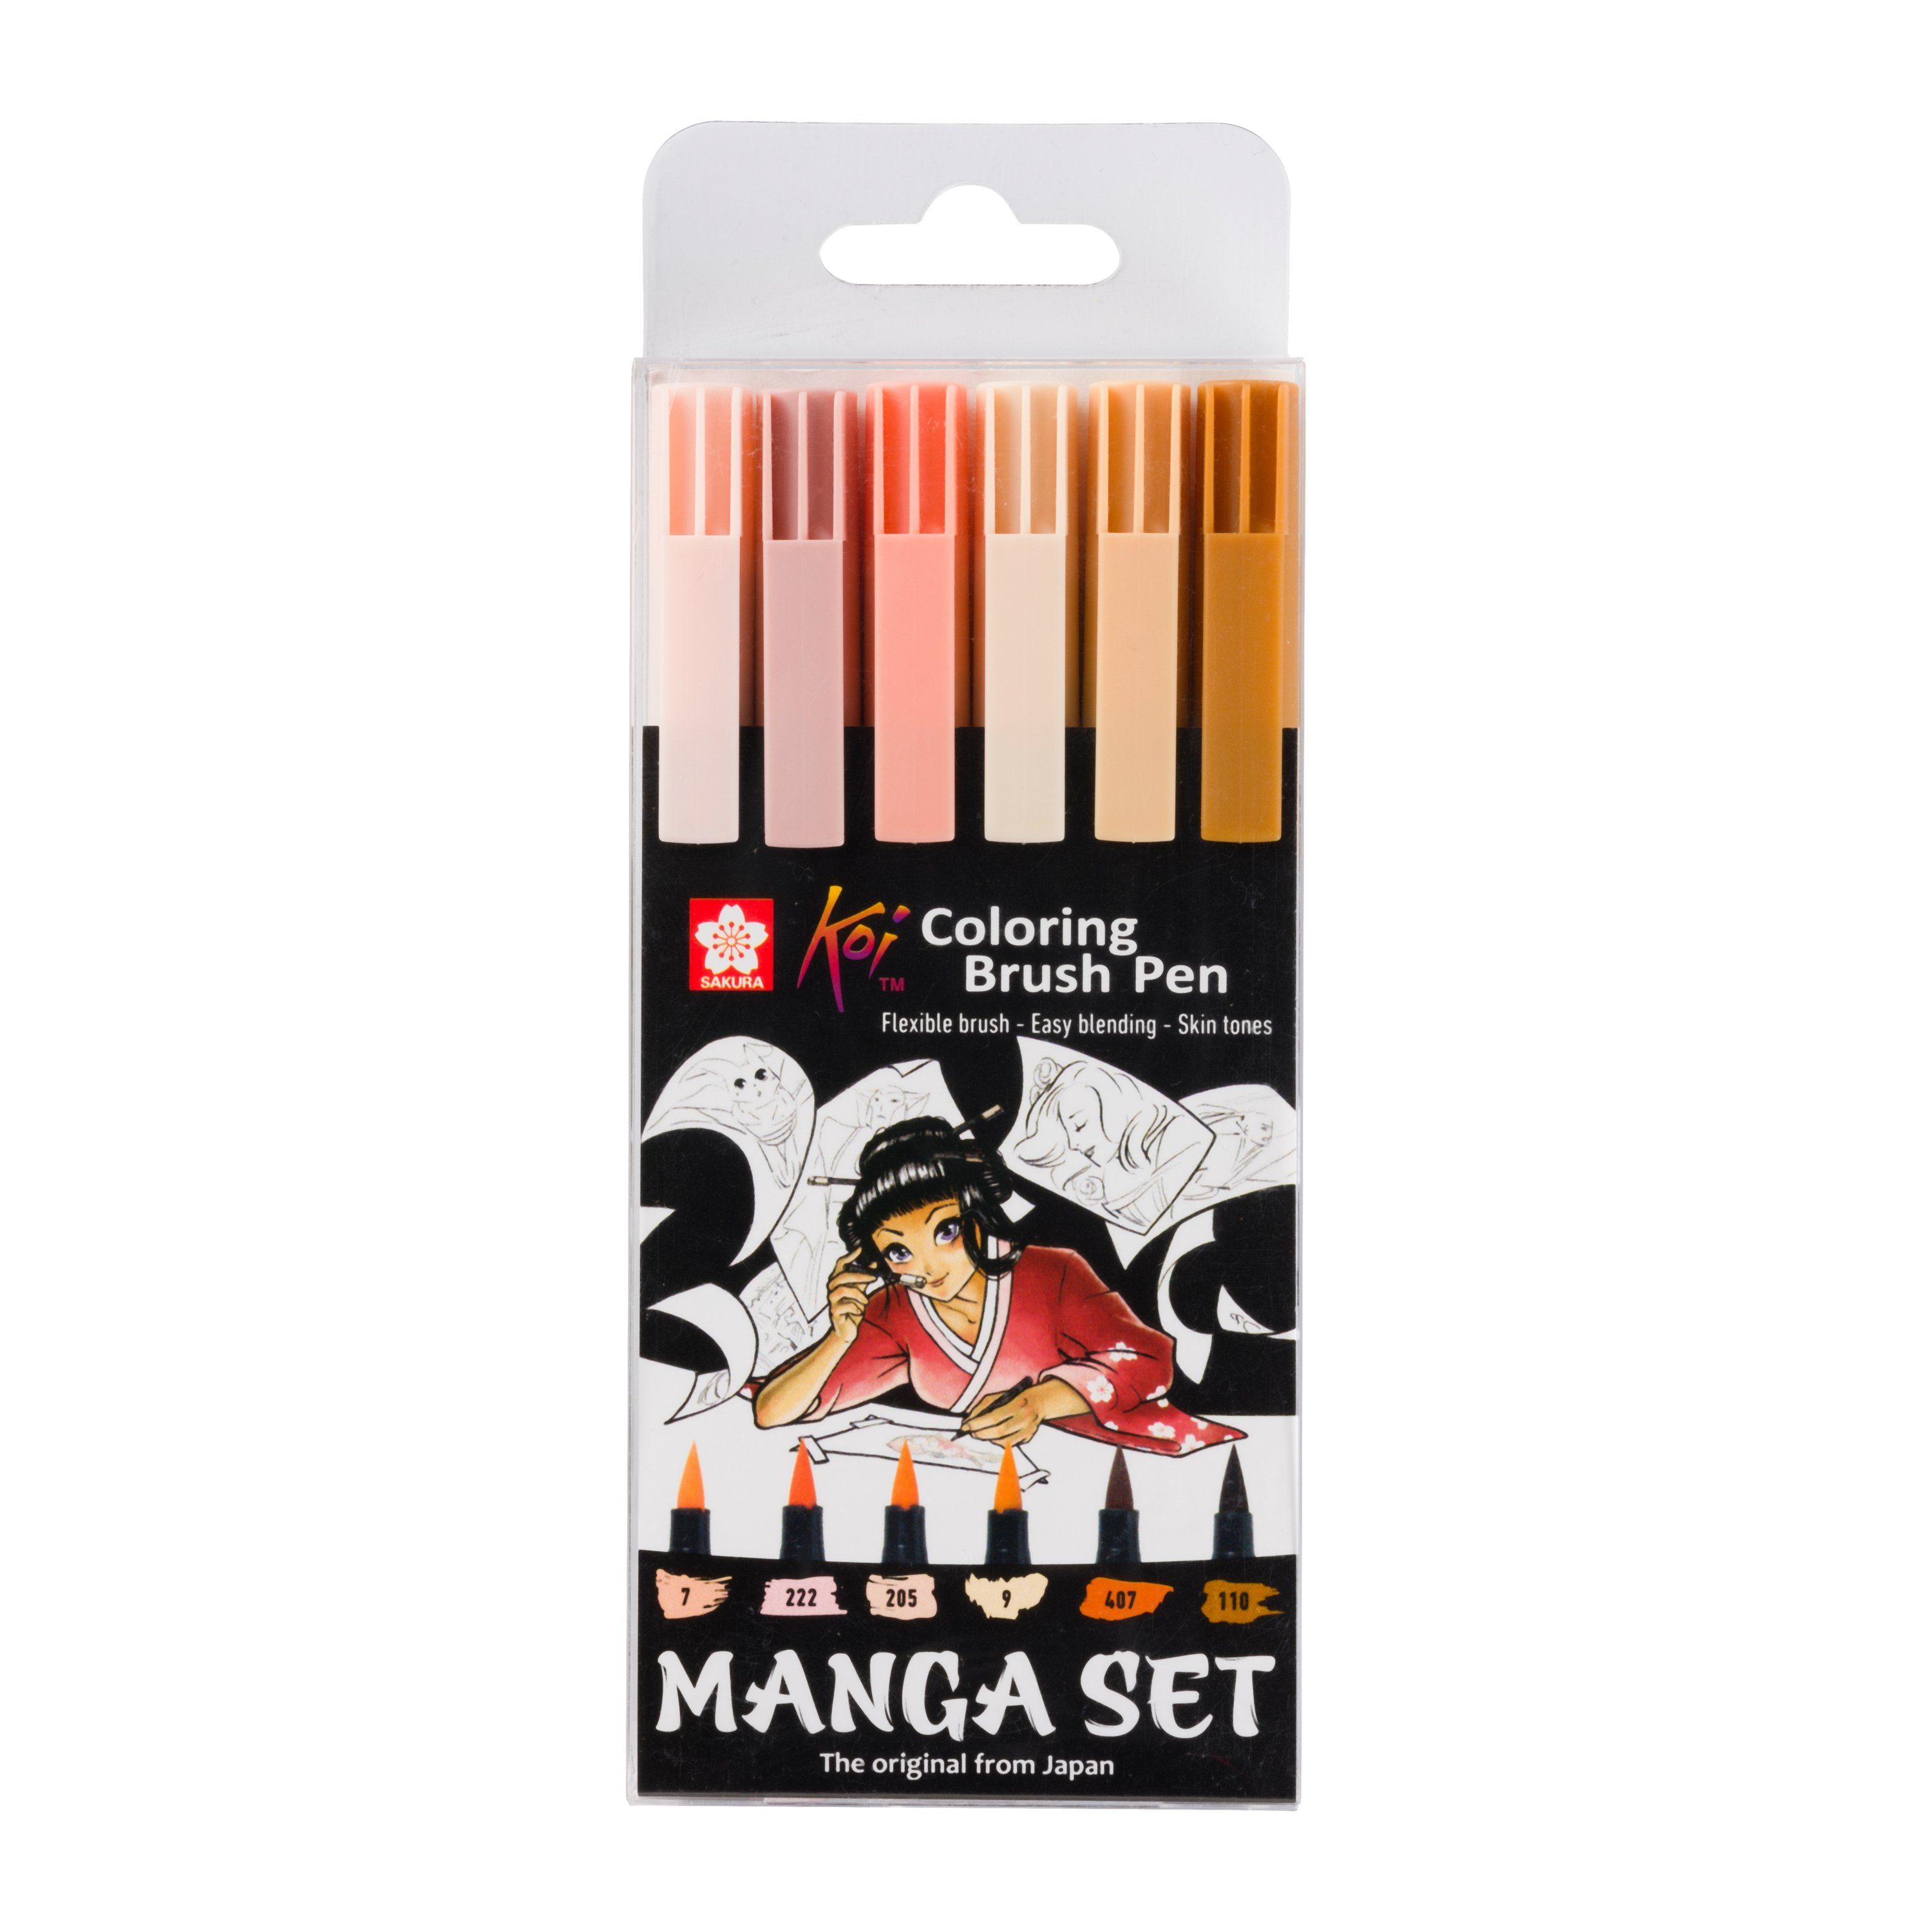 Sakura Pinselstift Koi Colouring Brush pen Manga Sammlung, 6er-Set | Malstifte